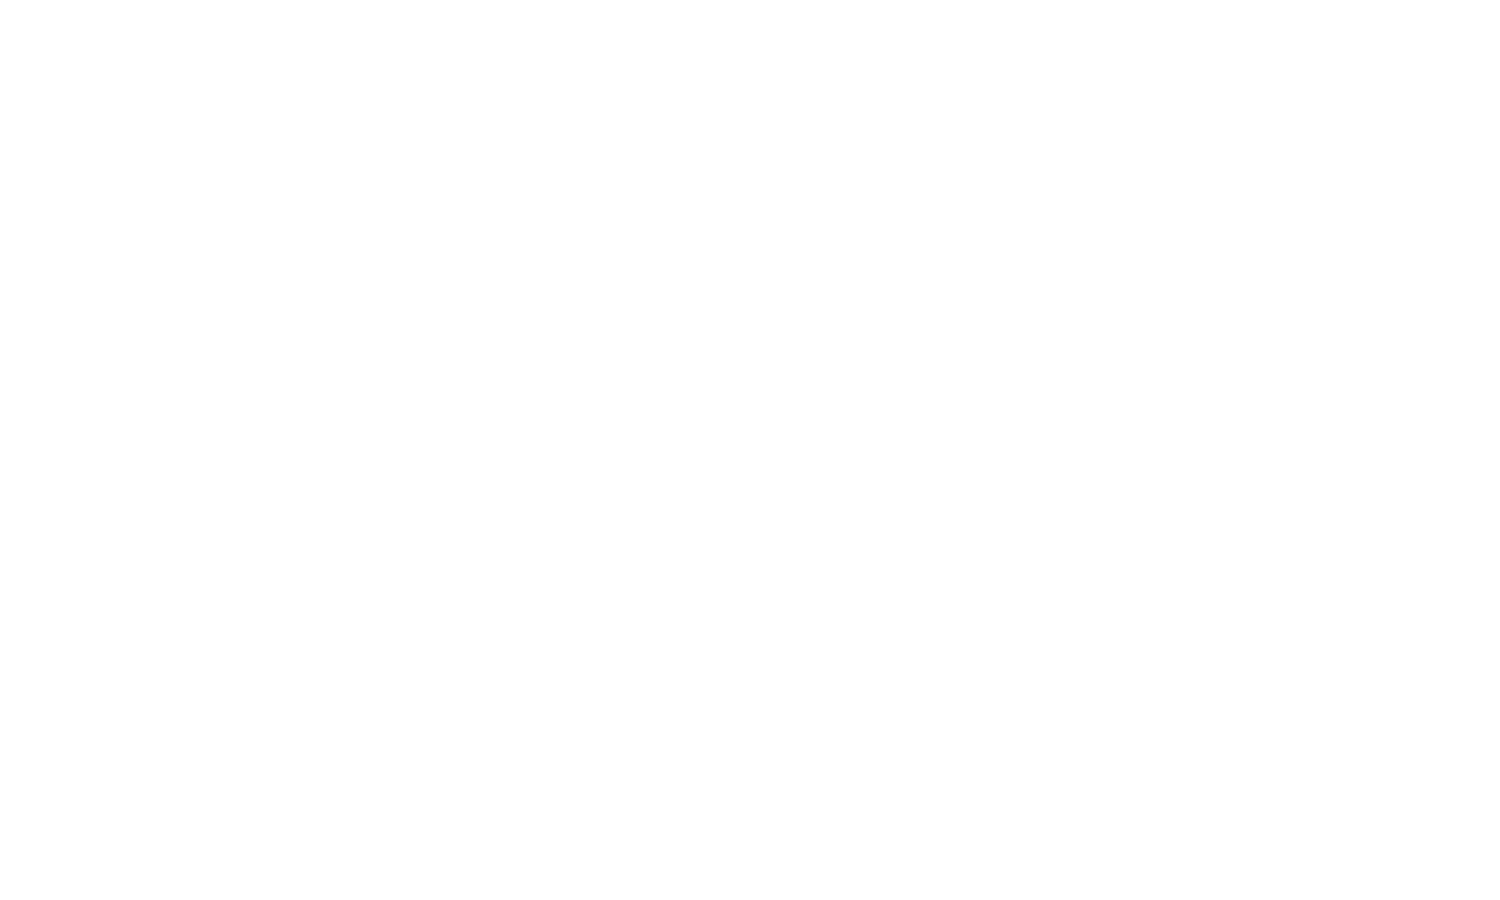 THE ABIE AGENCY